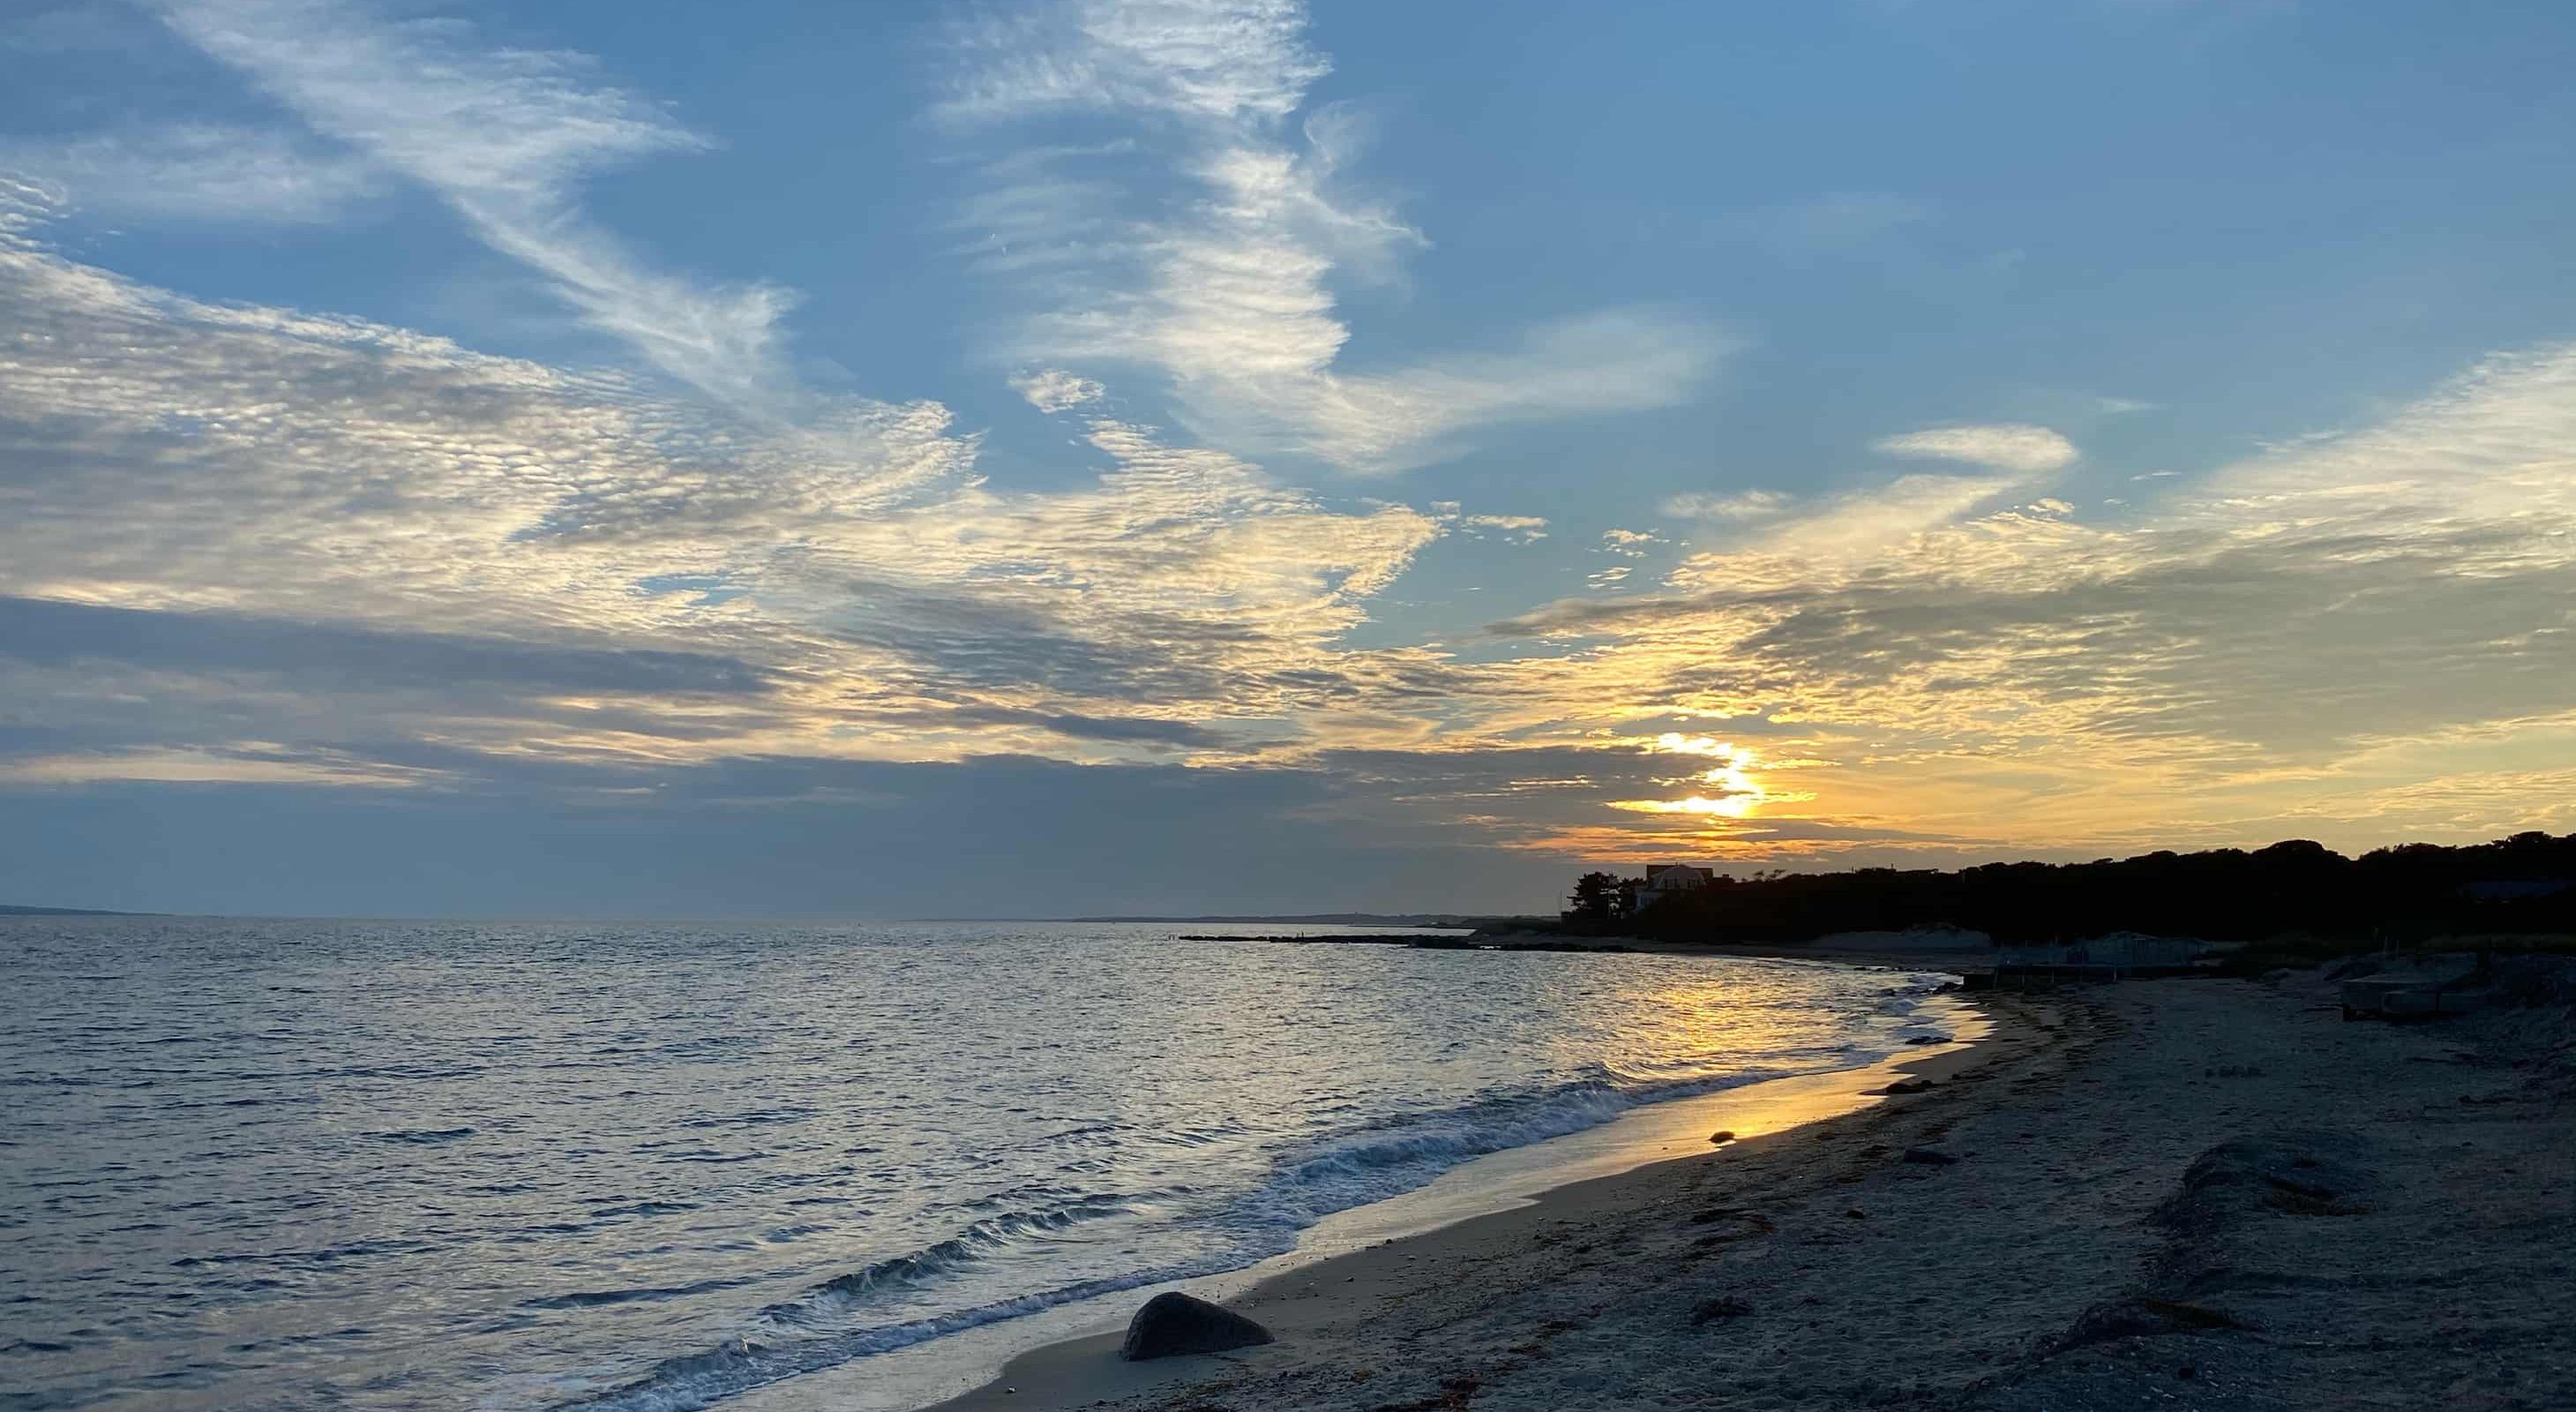 Sunset at Cape Cod beach in Falmouth, MA